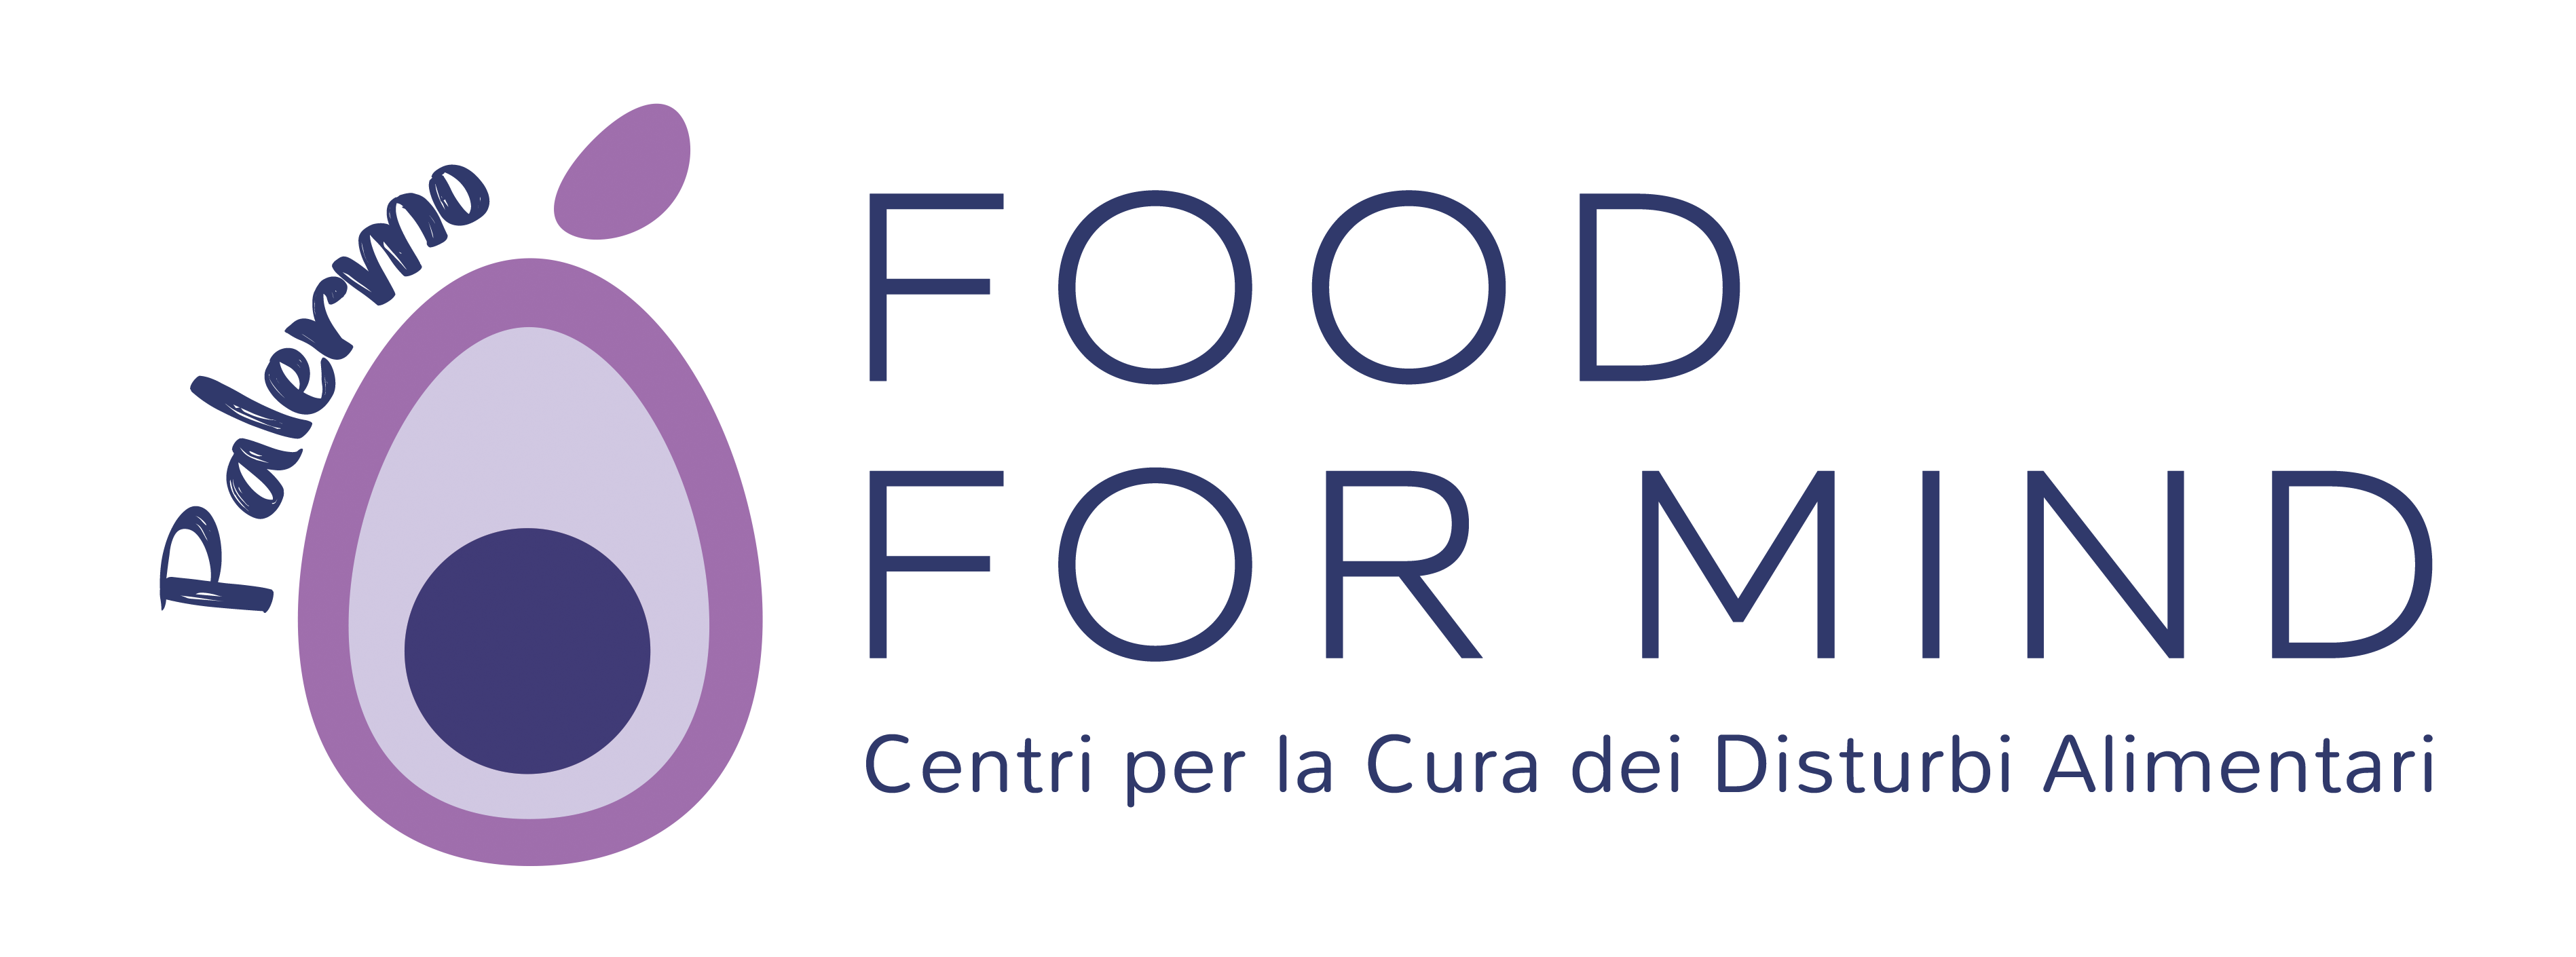 Logo_Palermo_F4M